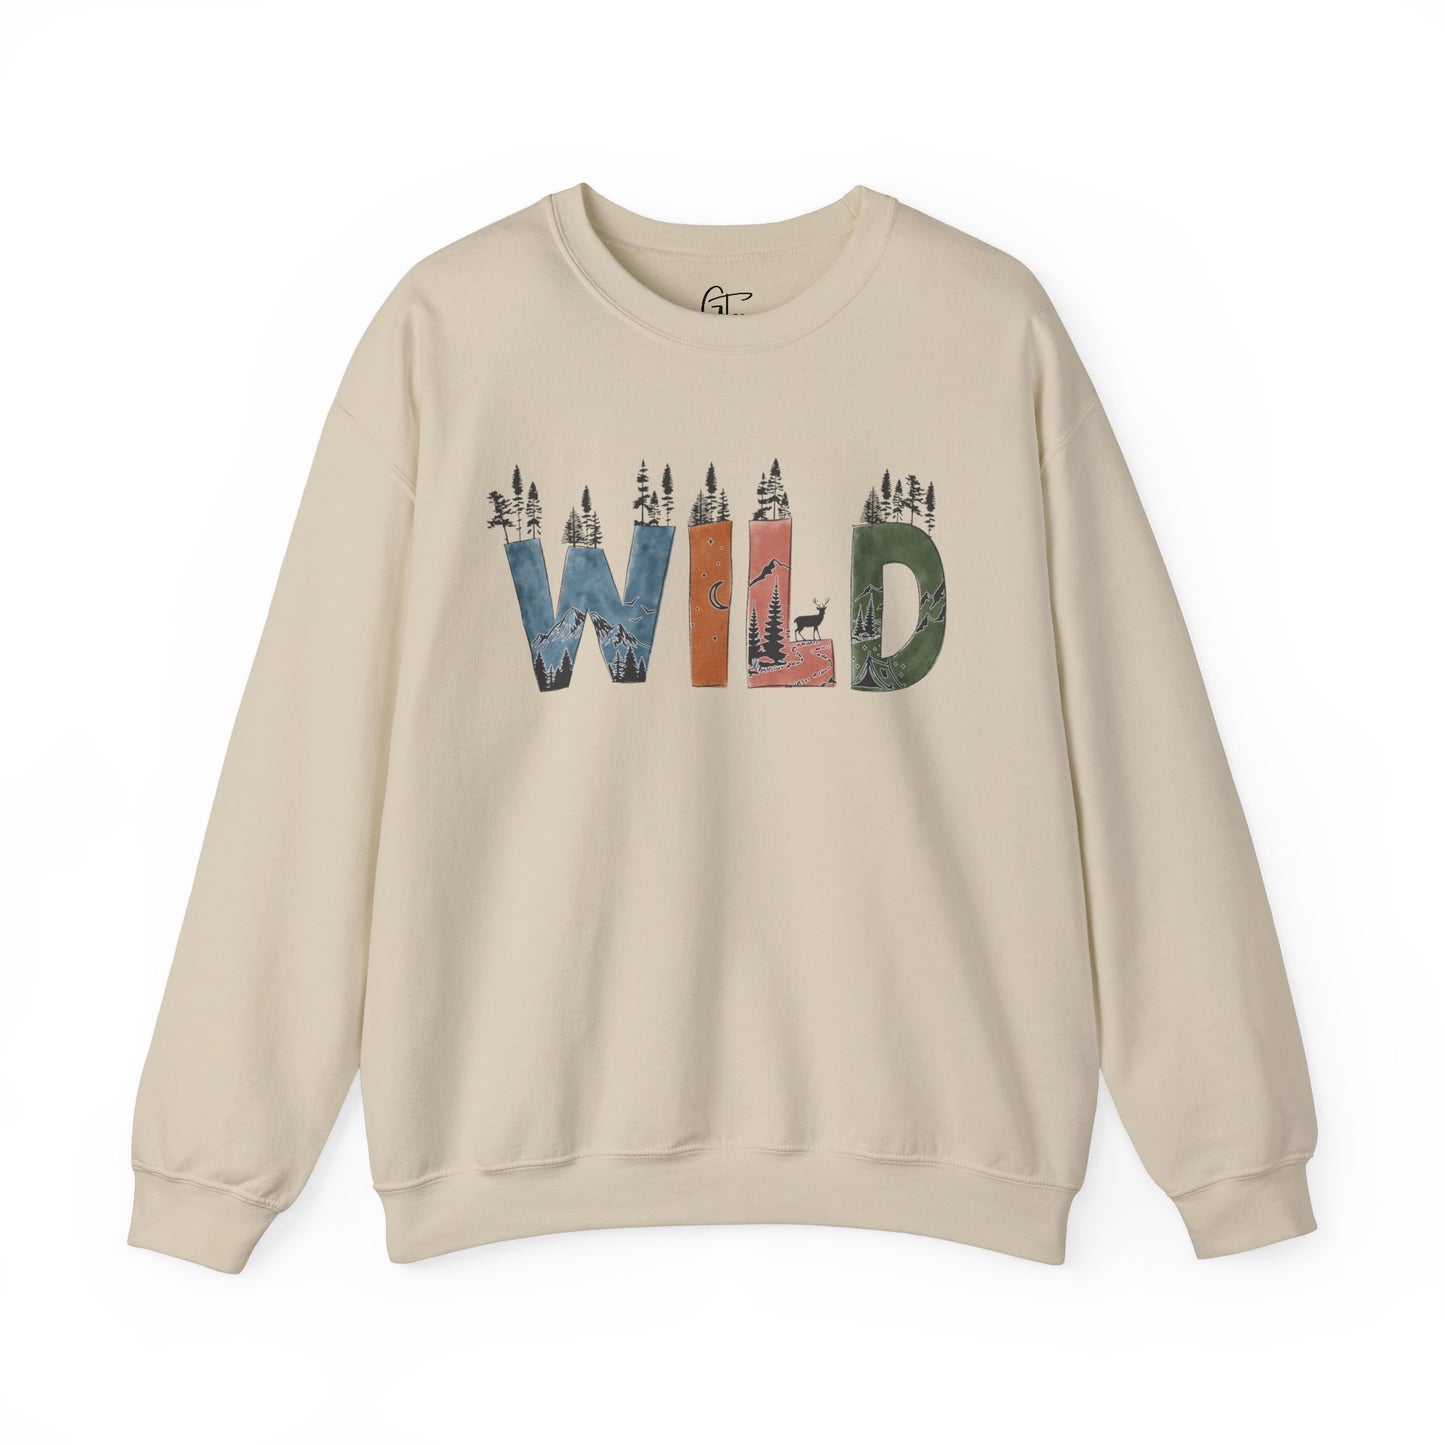 Campin in the Wild Sweatshirt